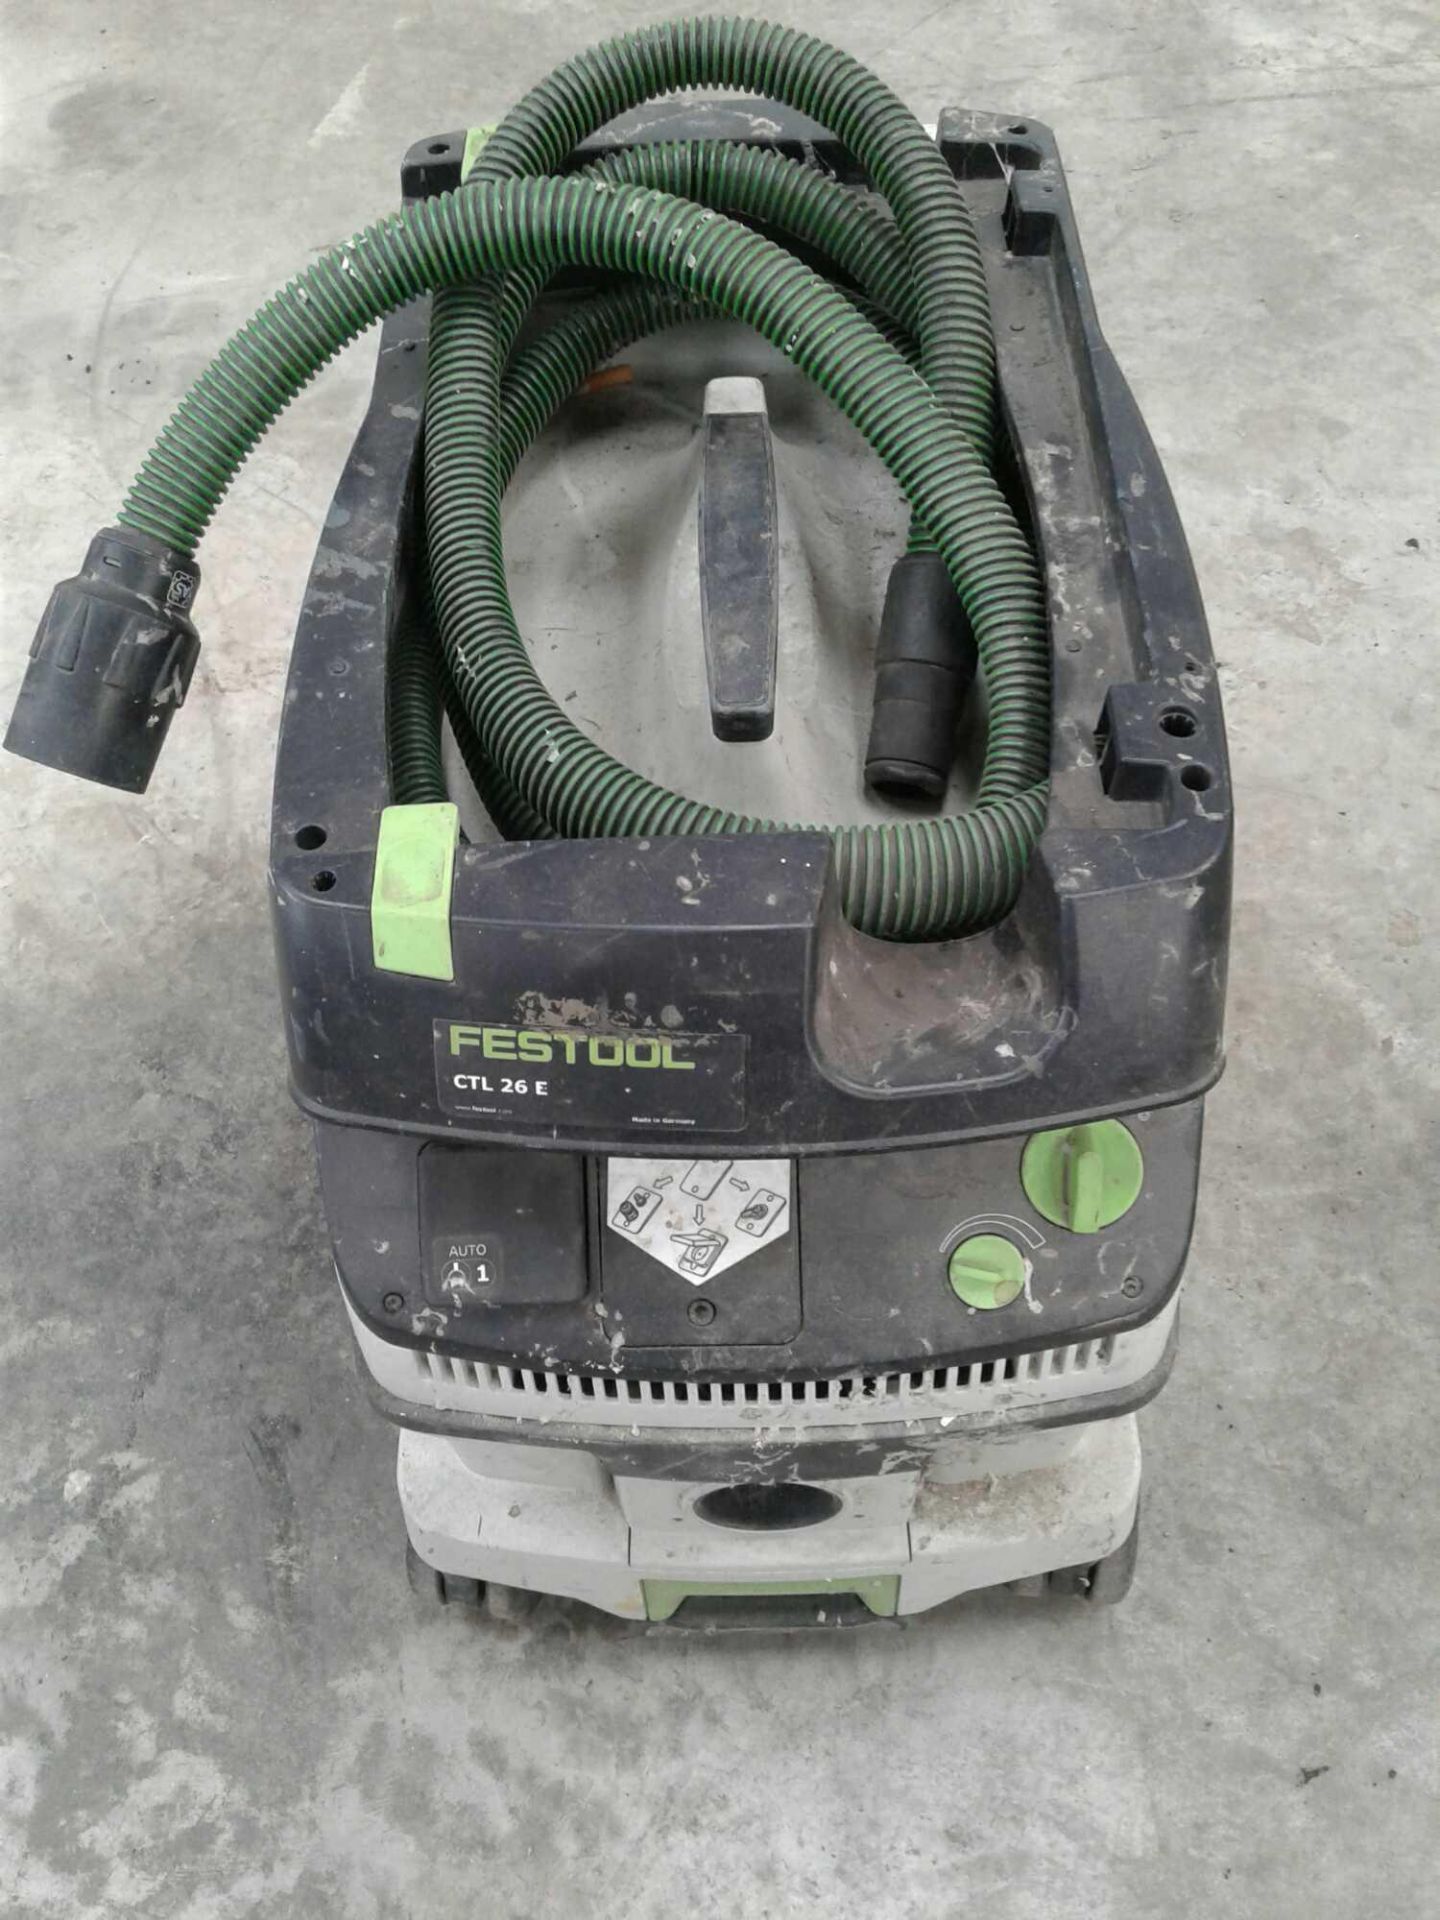 Festool industrial vacuum cleaner 240v - Image 2 of 3